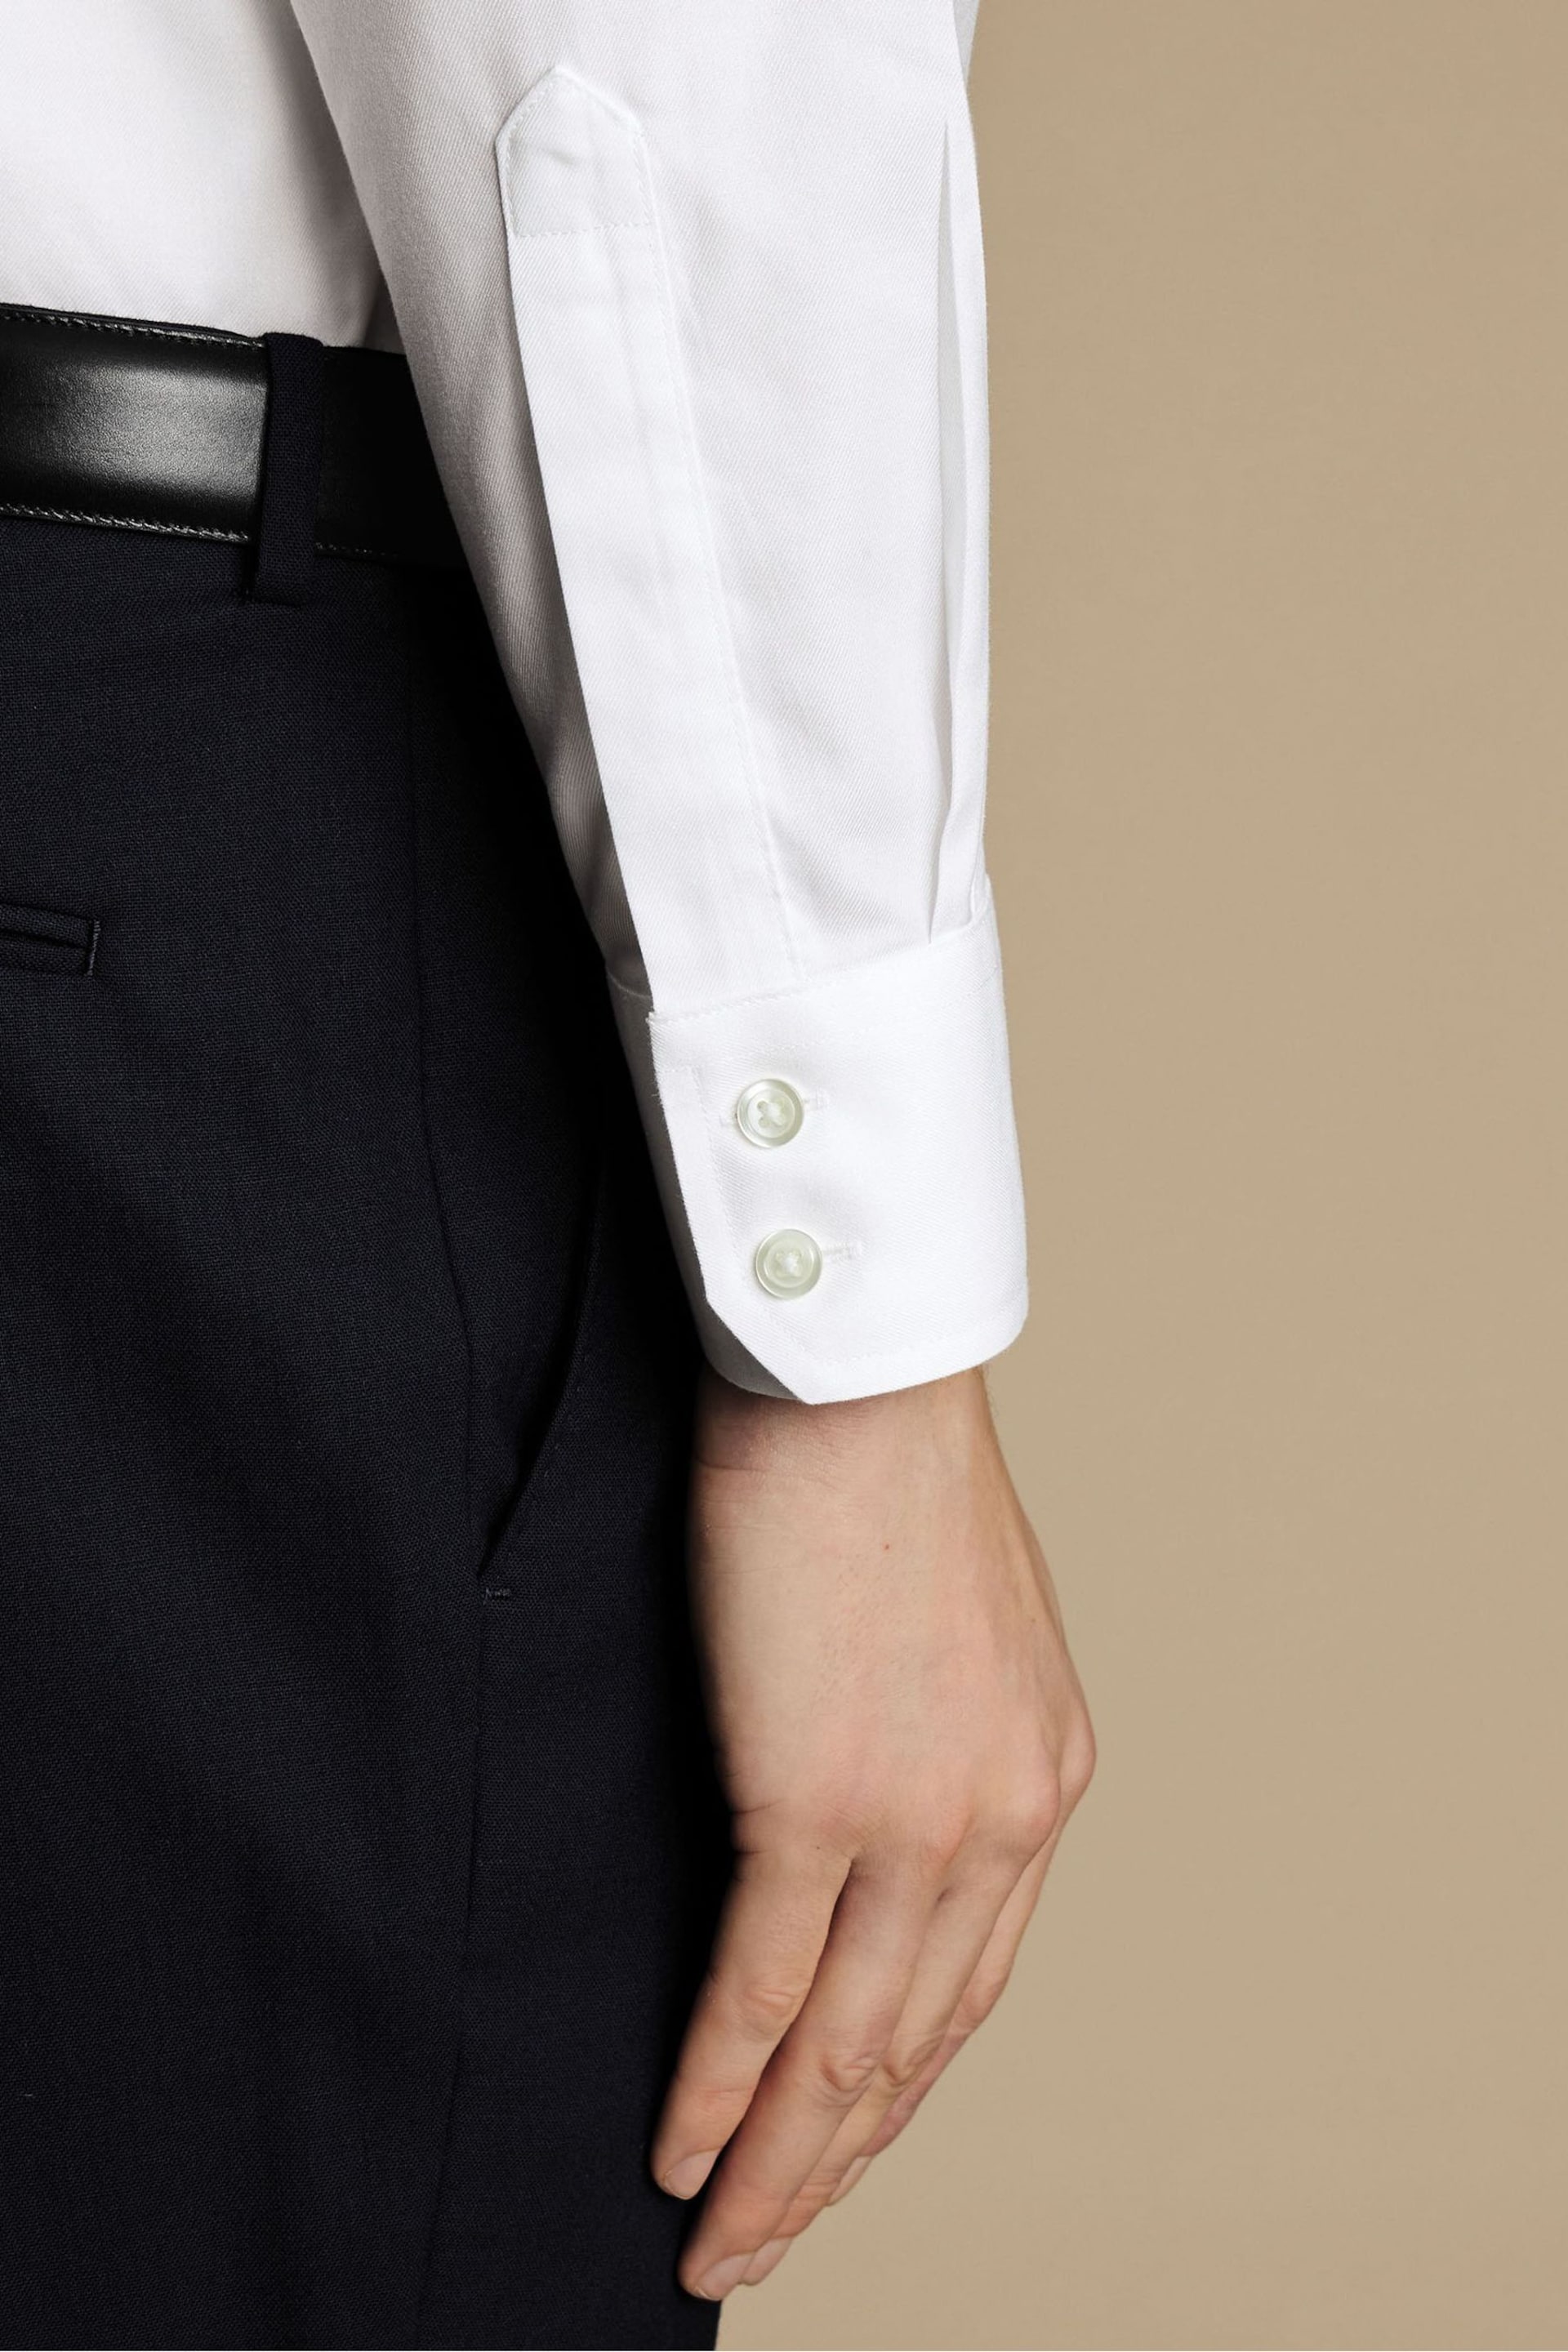 Charles Tyrwhitt White Non-iron Twill Extreme Cutaway Slim Fit Shirt - Image 3 of 5